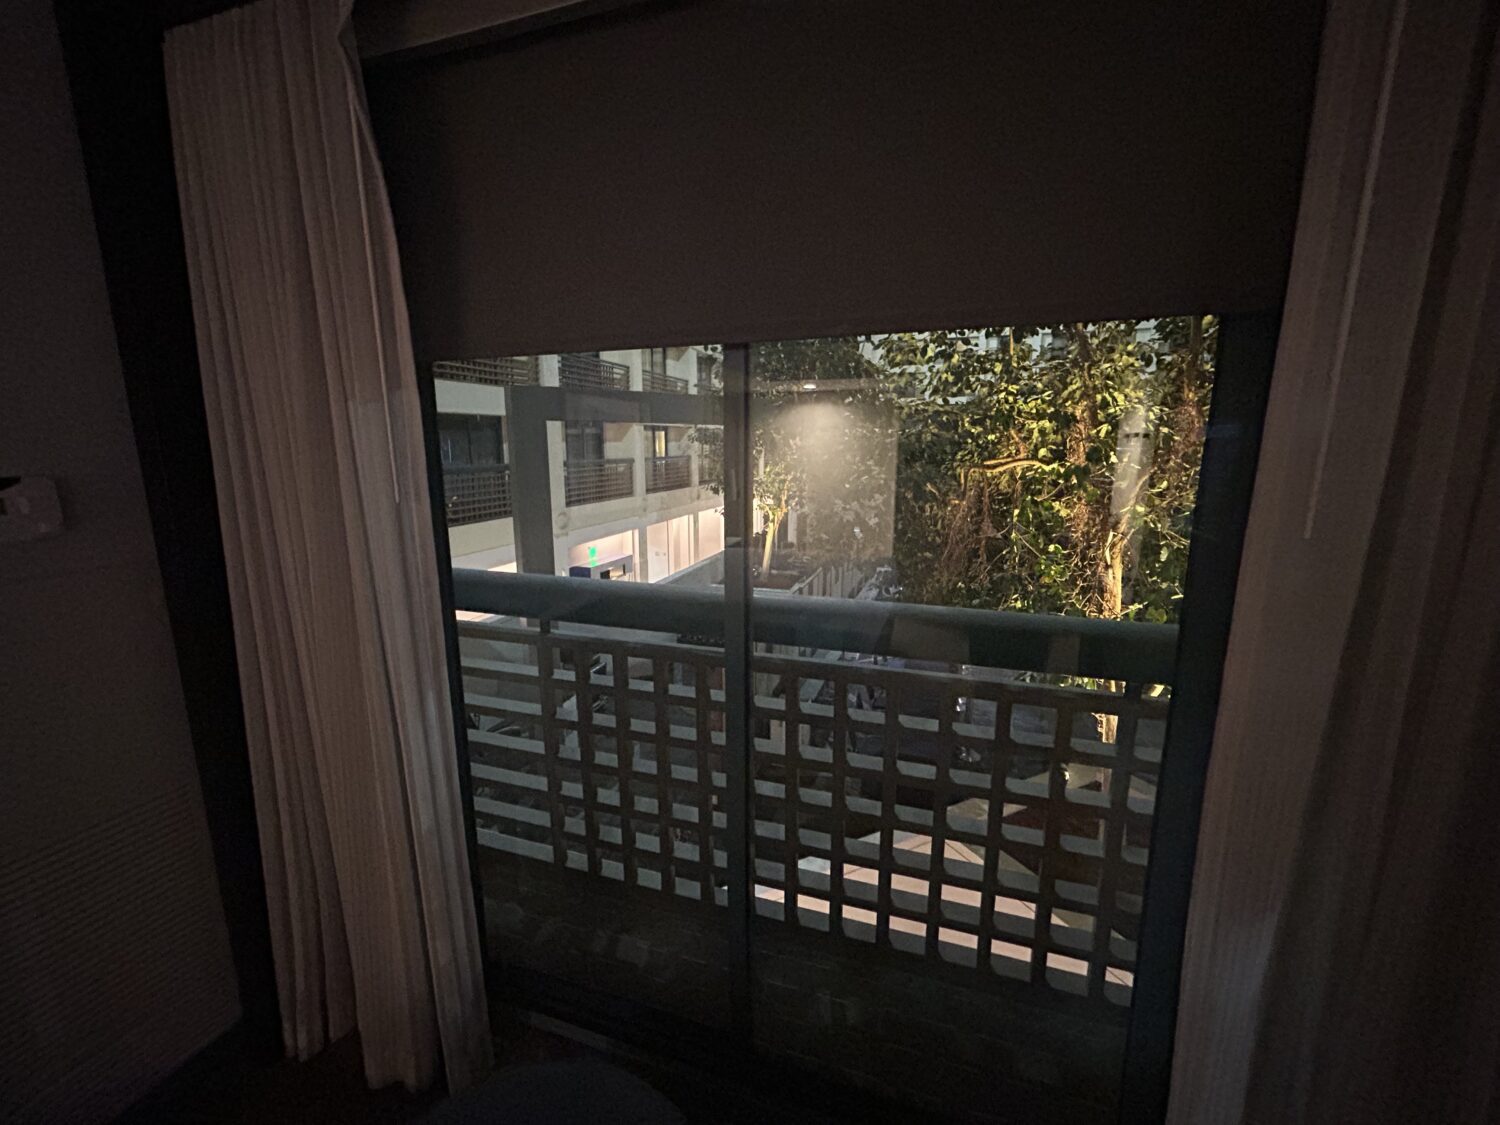 Windows into hotel